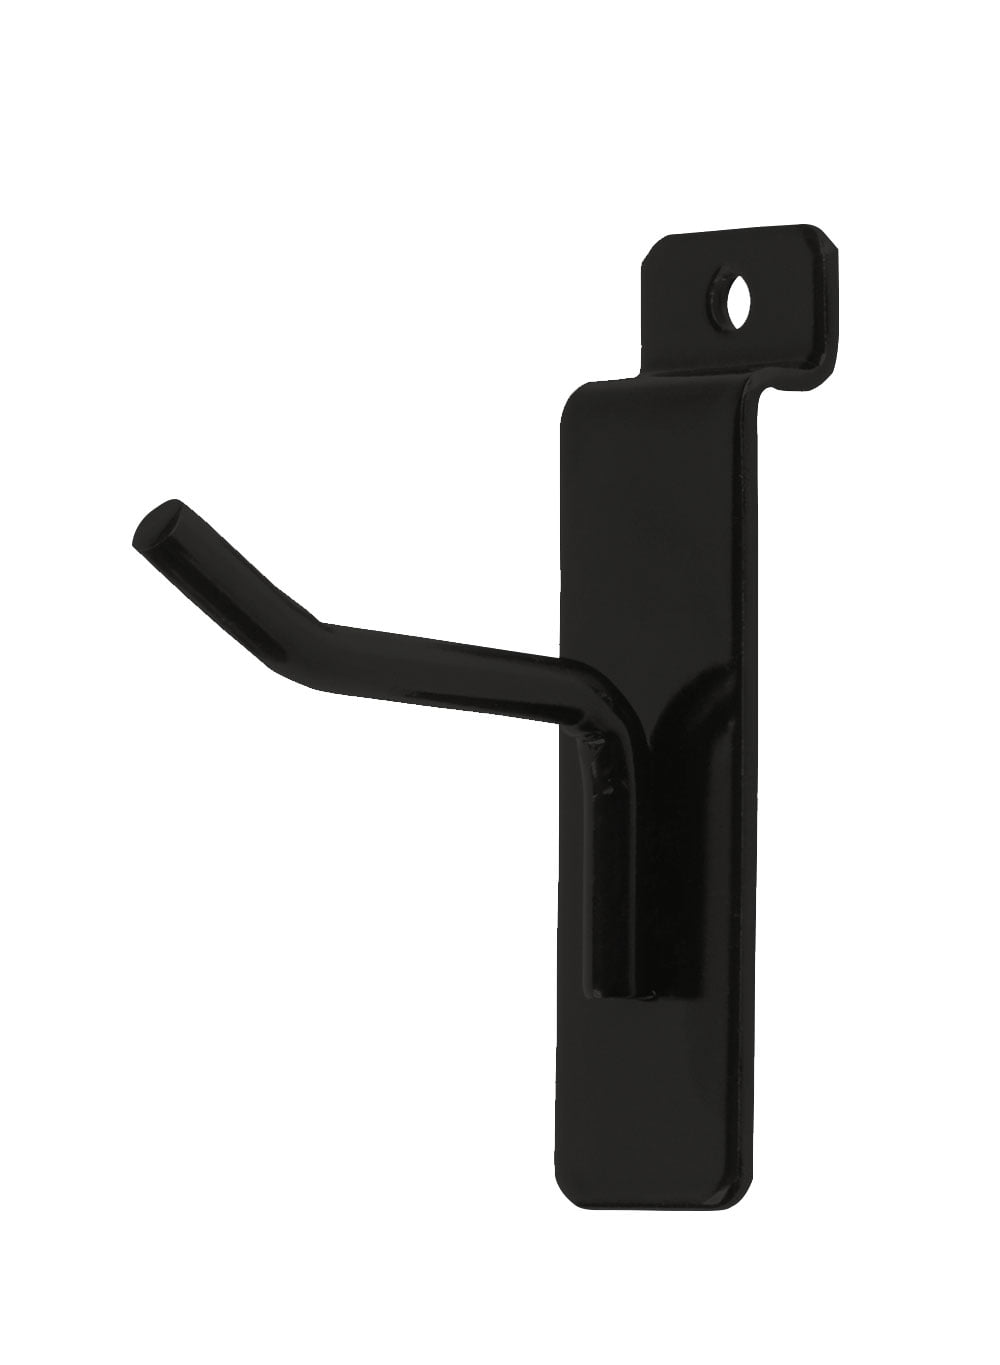 4" Wire Slat Grid Hooks Hook Pegs Gridwall 25 Black 6mm Tubing Retail Display 